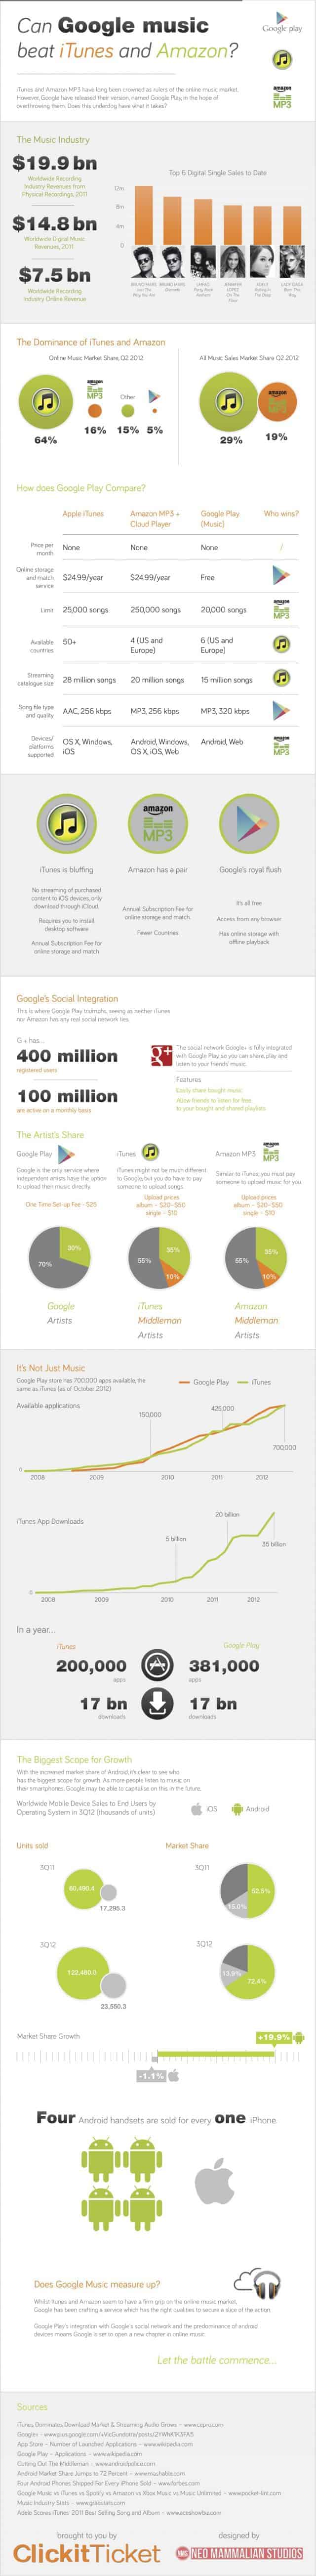 Google Music Vs. Itunes & Amazon